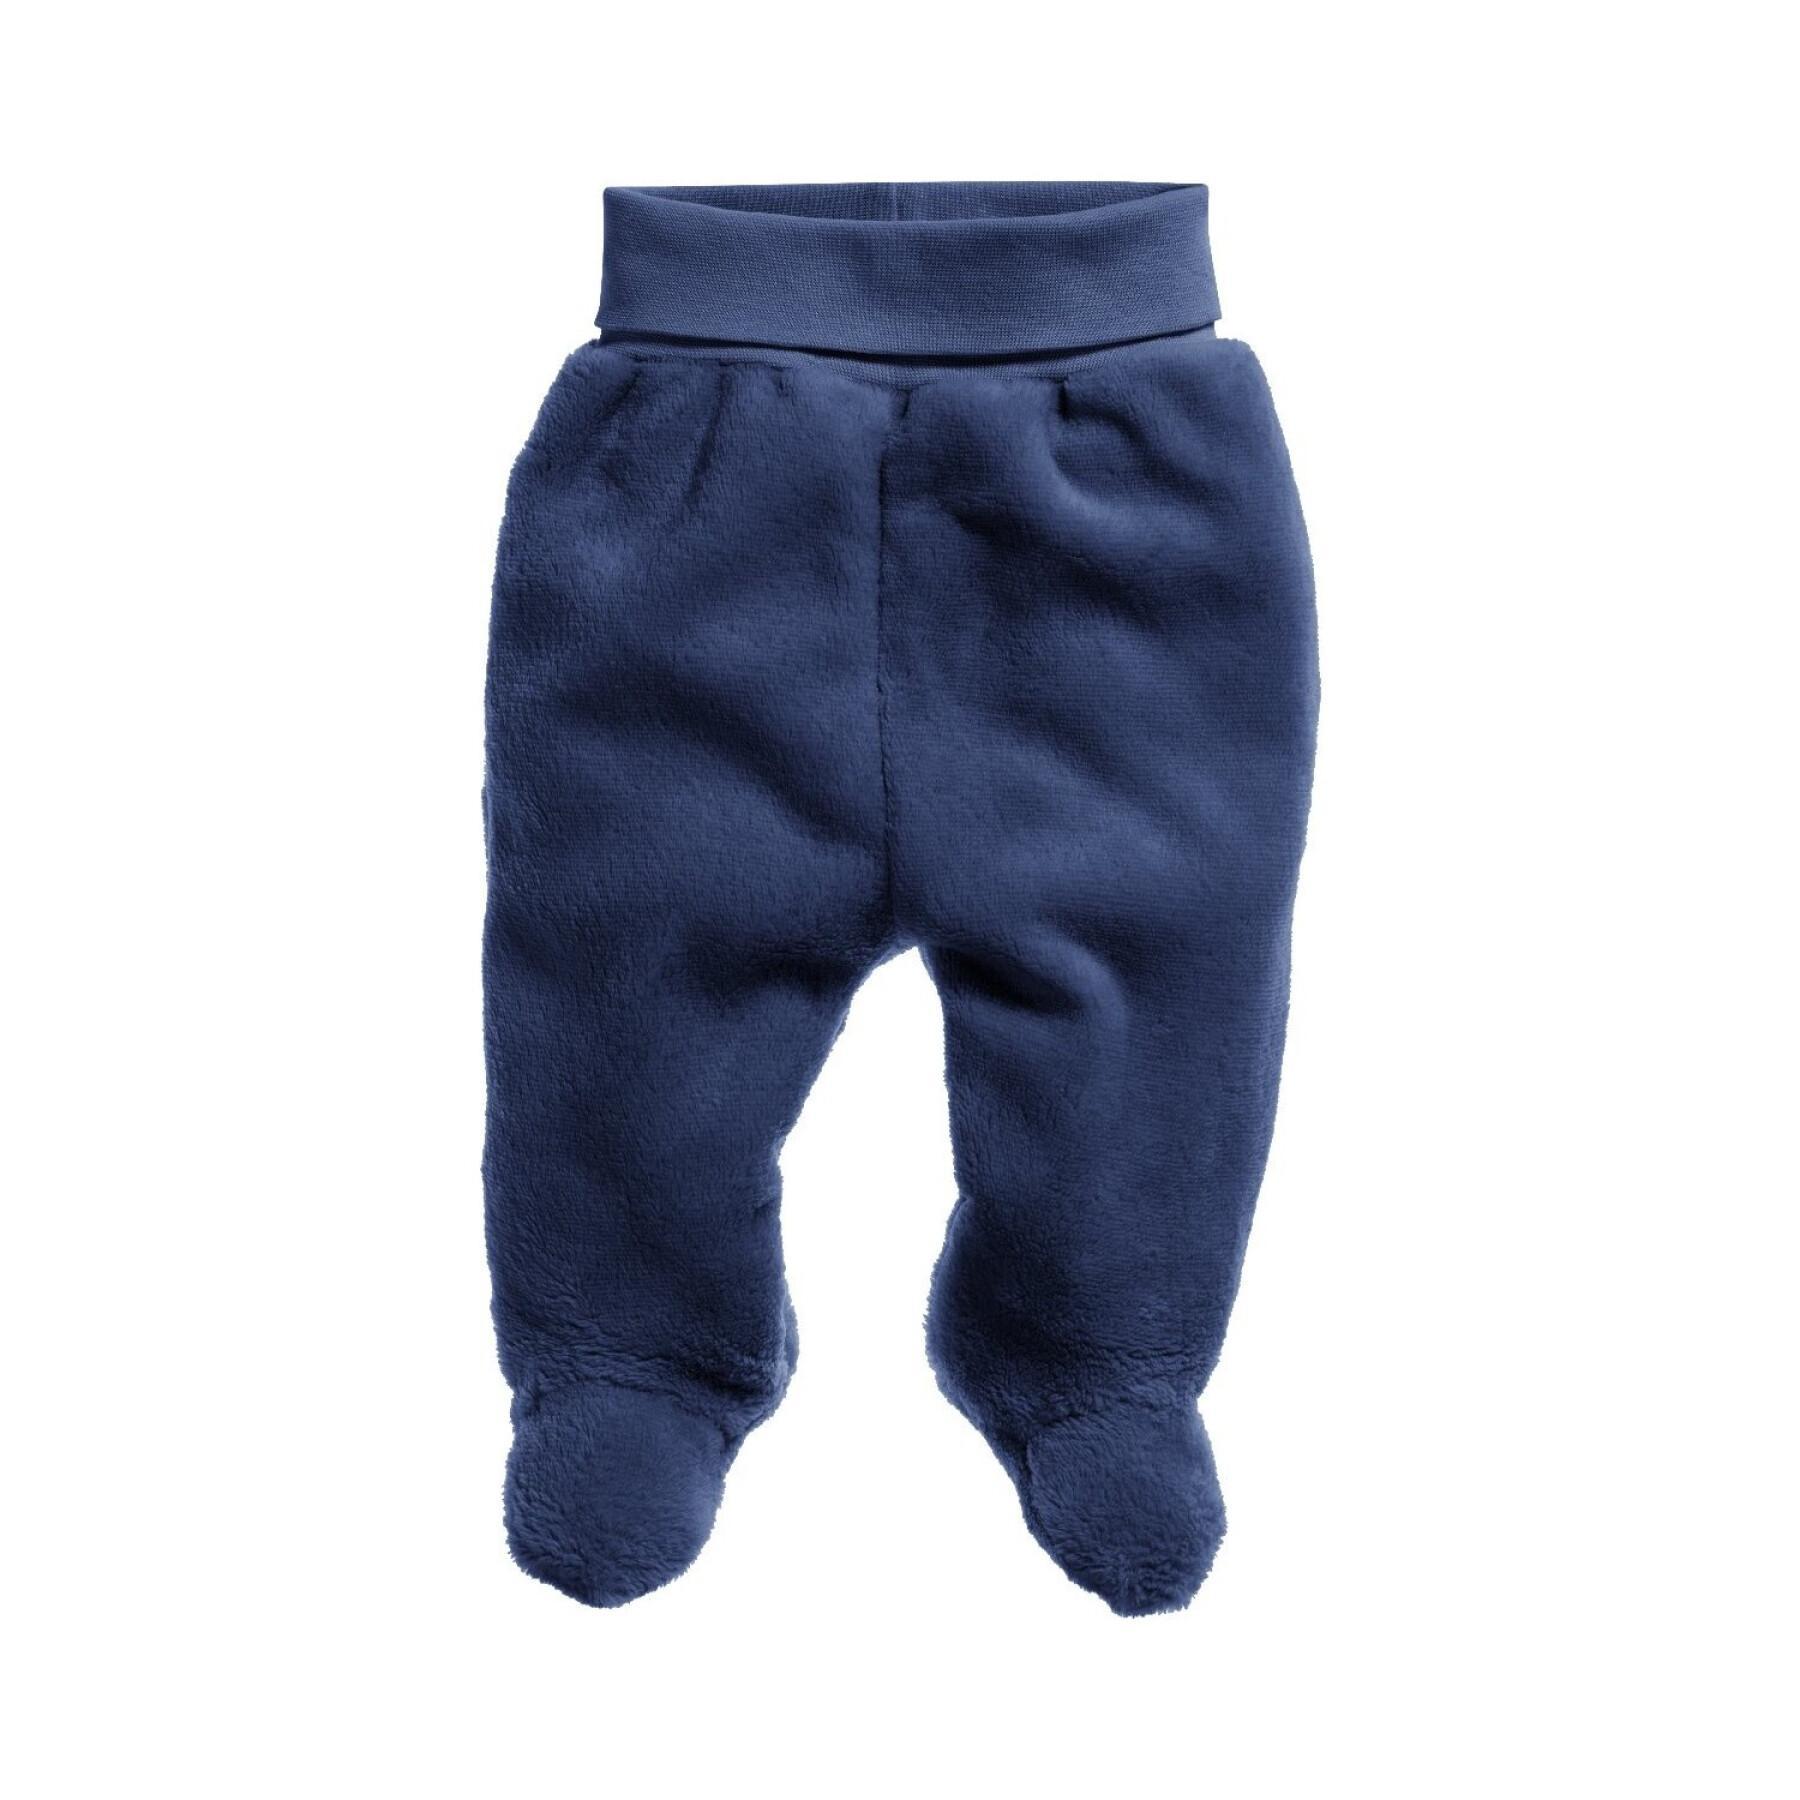 Cozy fleece pants for young babies Playshoes